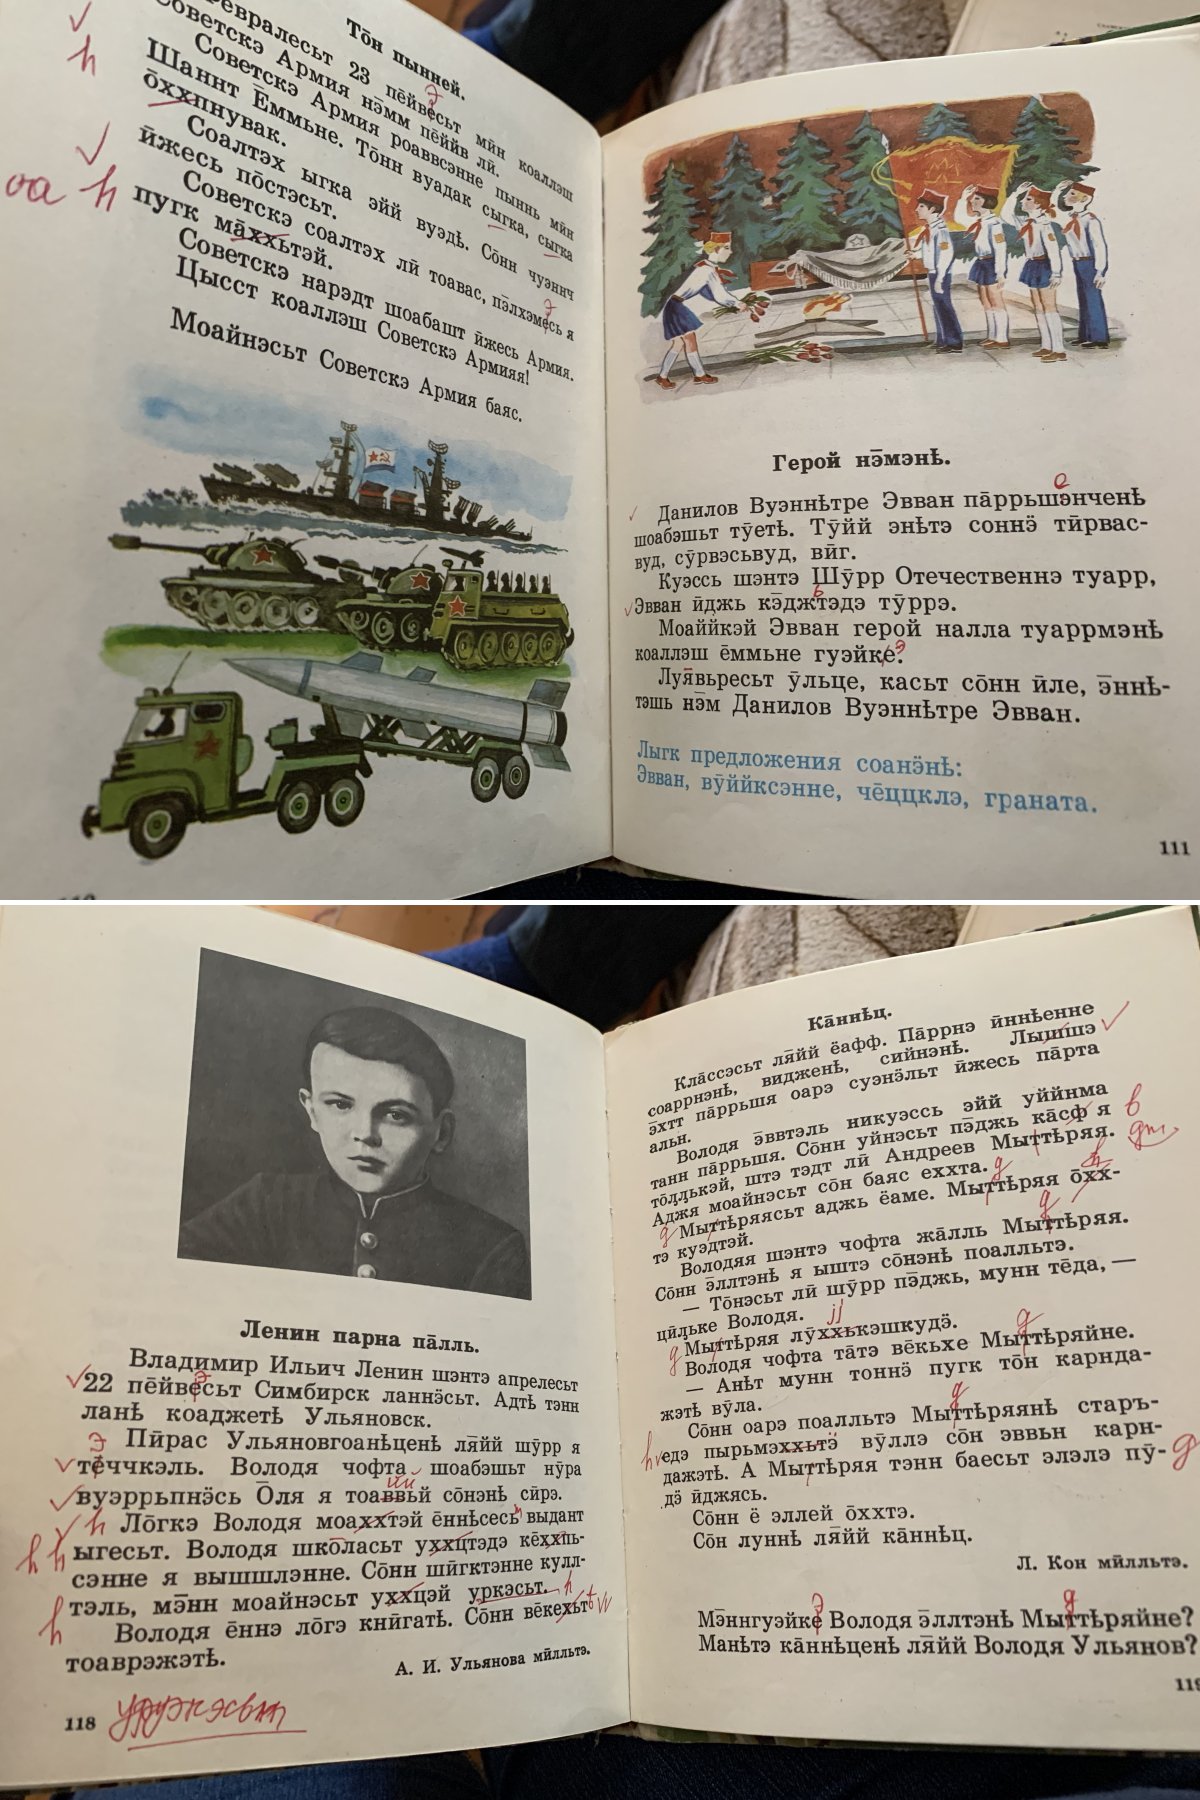 Советские учебники грамматики языка саами